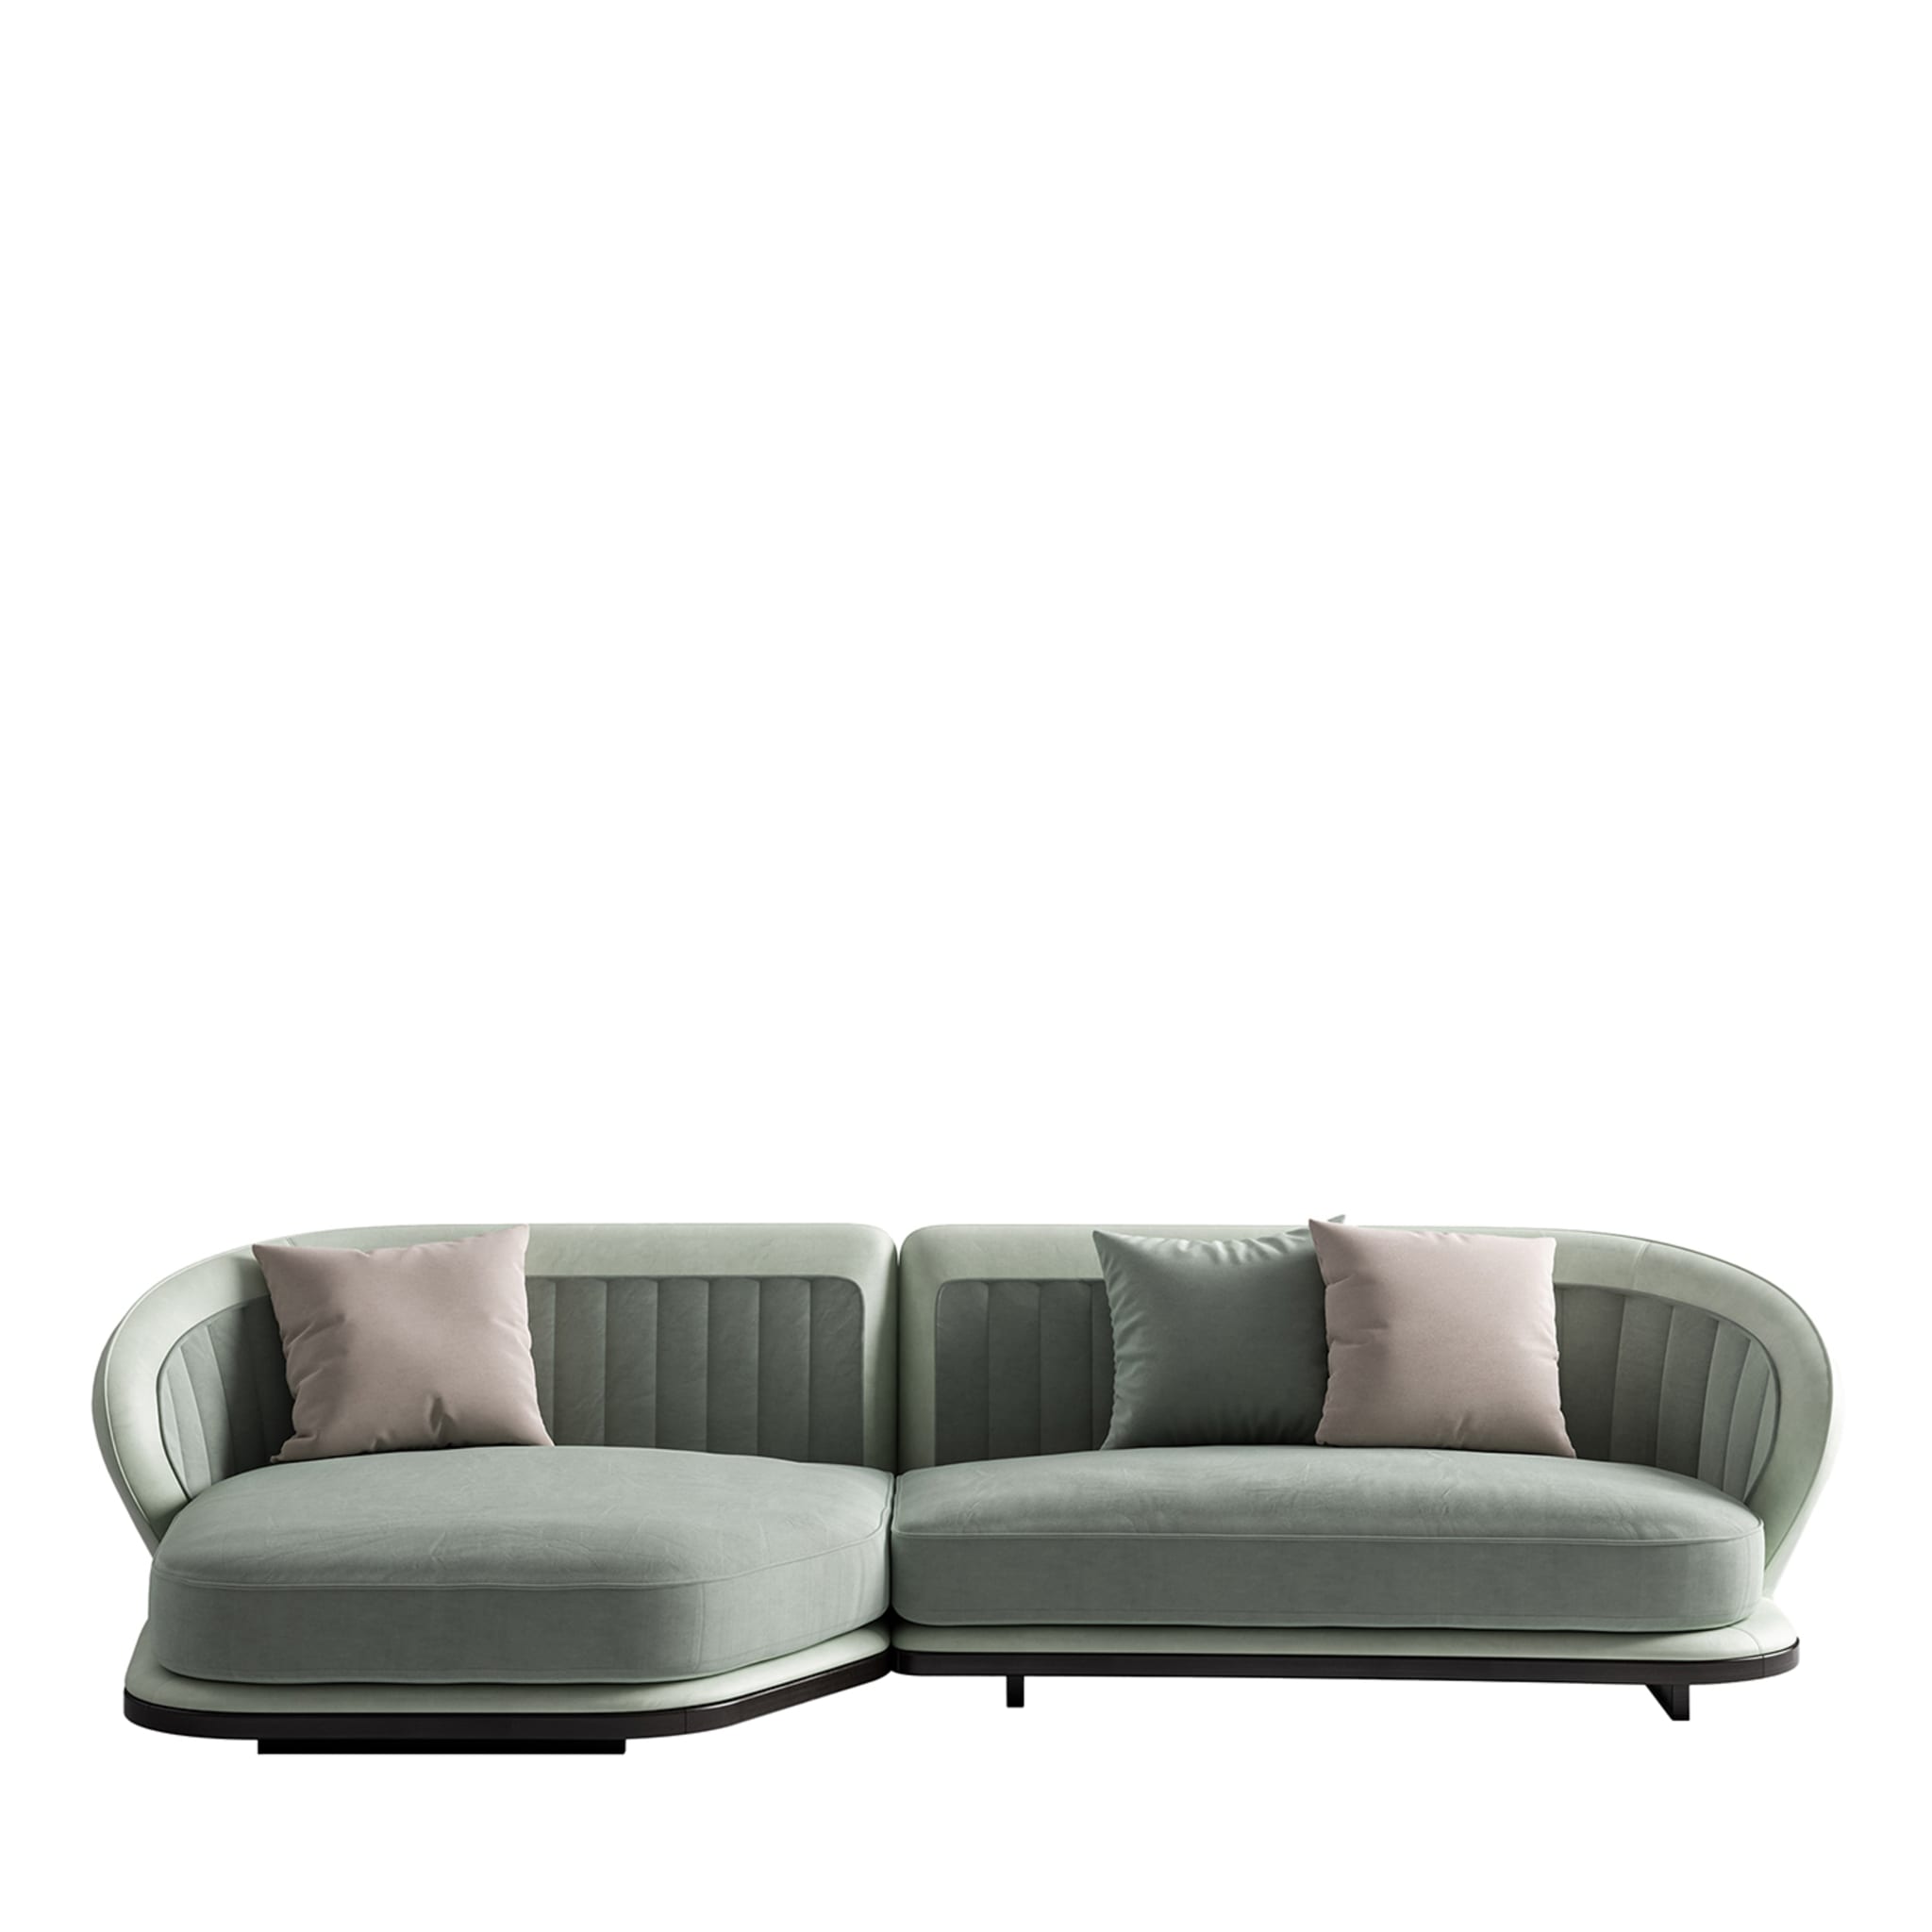 Hellgrünes modulares Sofa - Hauptansicht